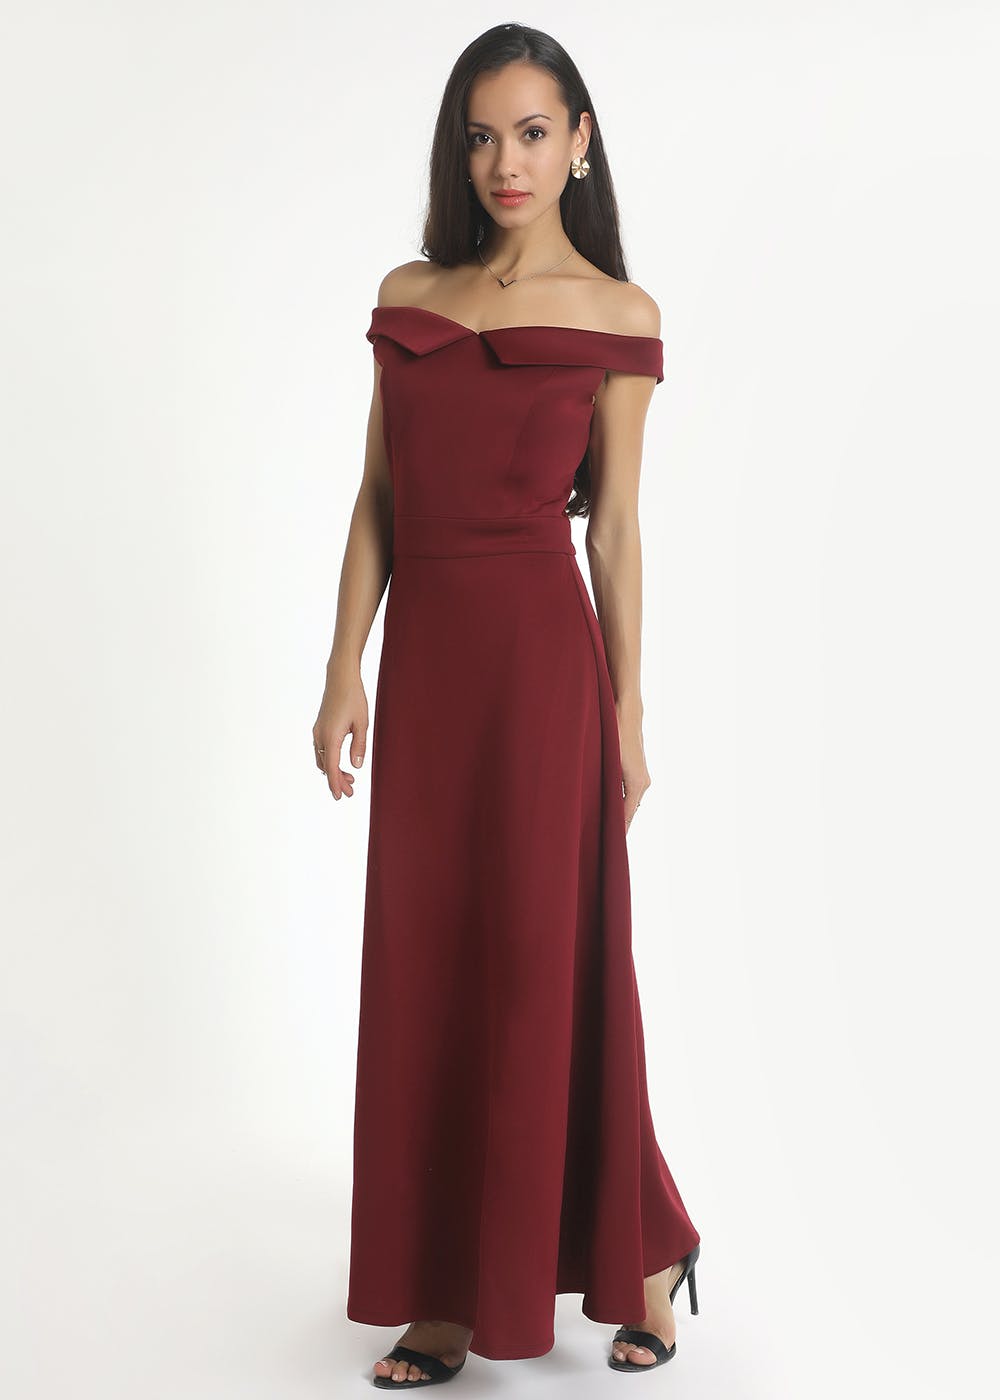 Stylish Women Half Sleeves Solid Off Shoulder Asymmetric Casual Loose Long  Dress | eBay